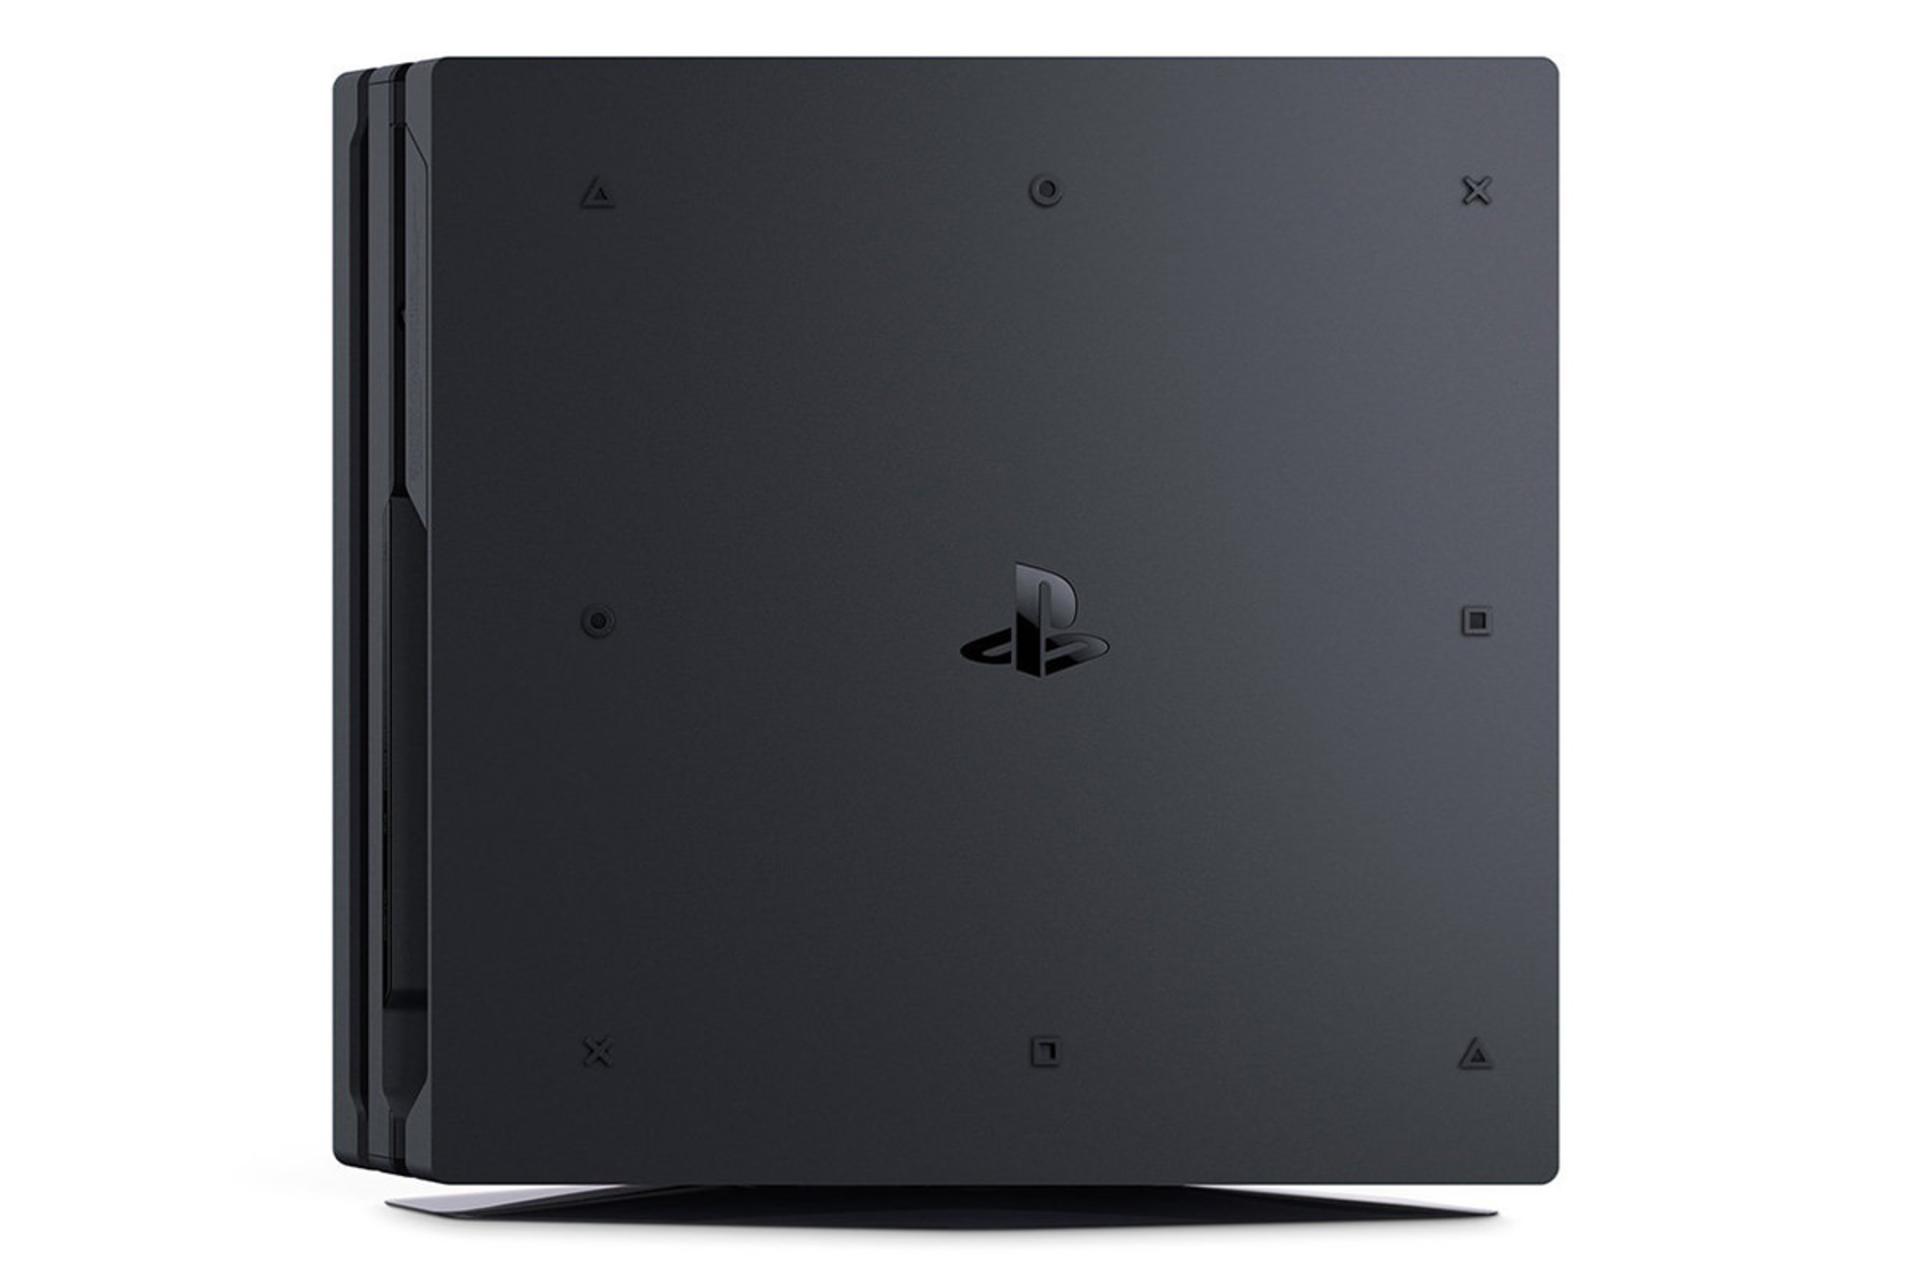 مرجع متخصصين ايران پلي استيشن 4 پرو سوني نماي زير به صورت ايستاده / Sony Playstation 4 Pro